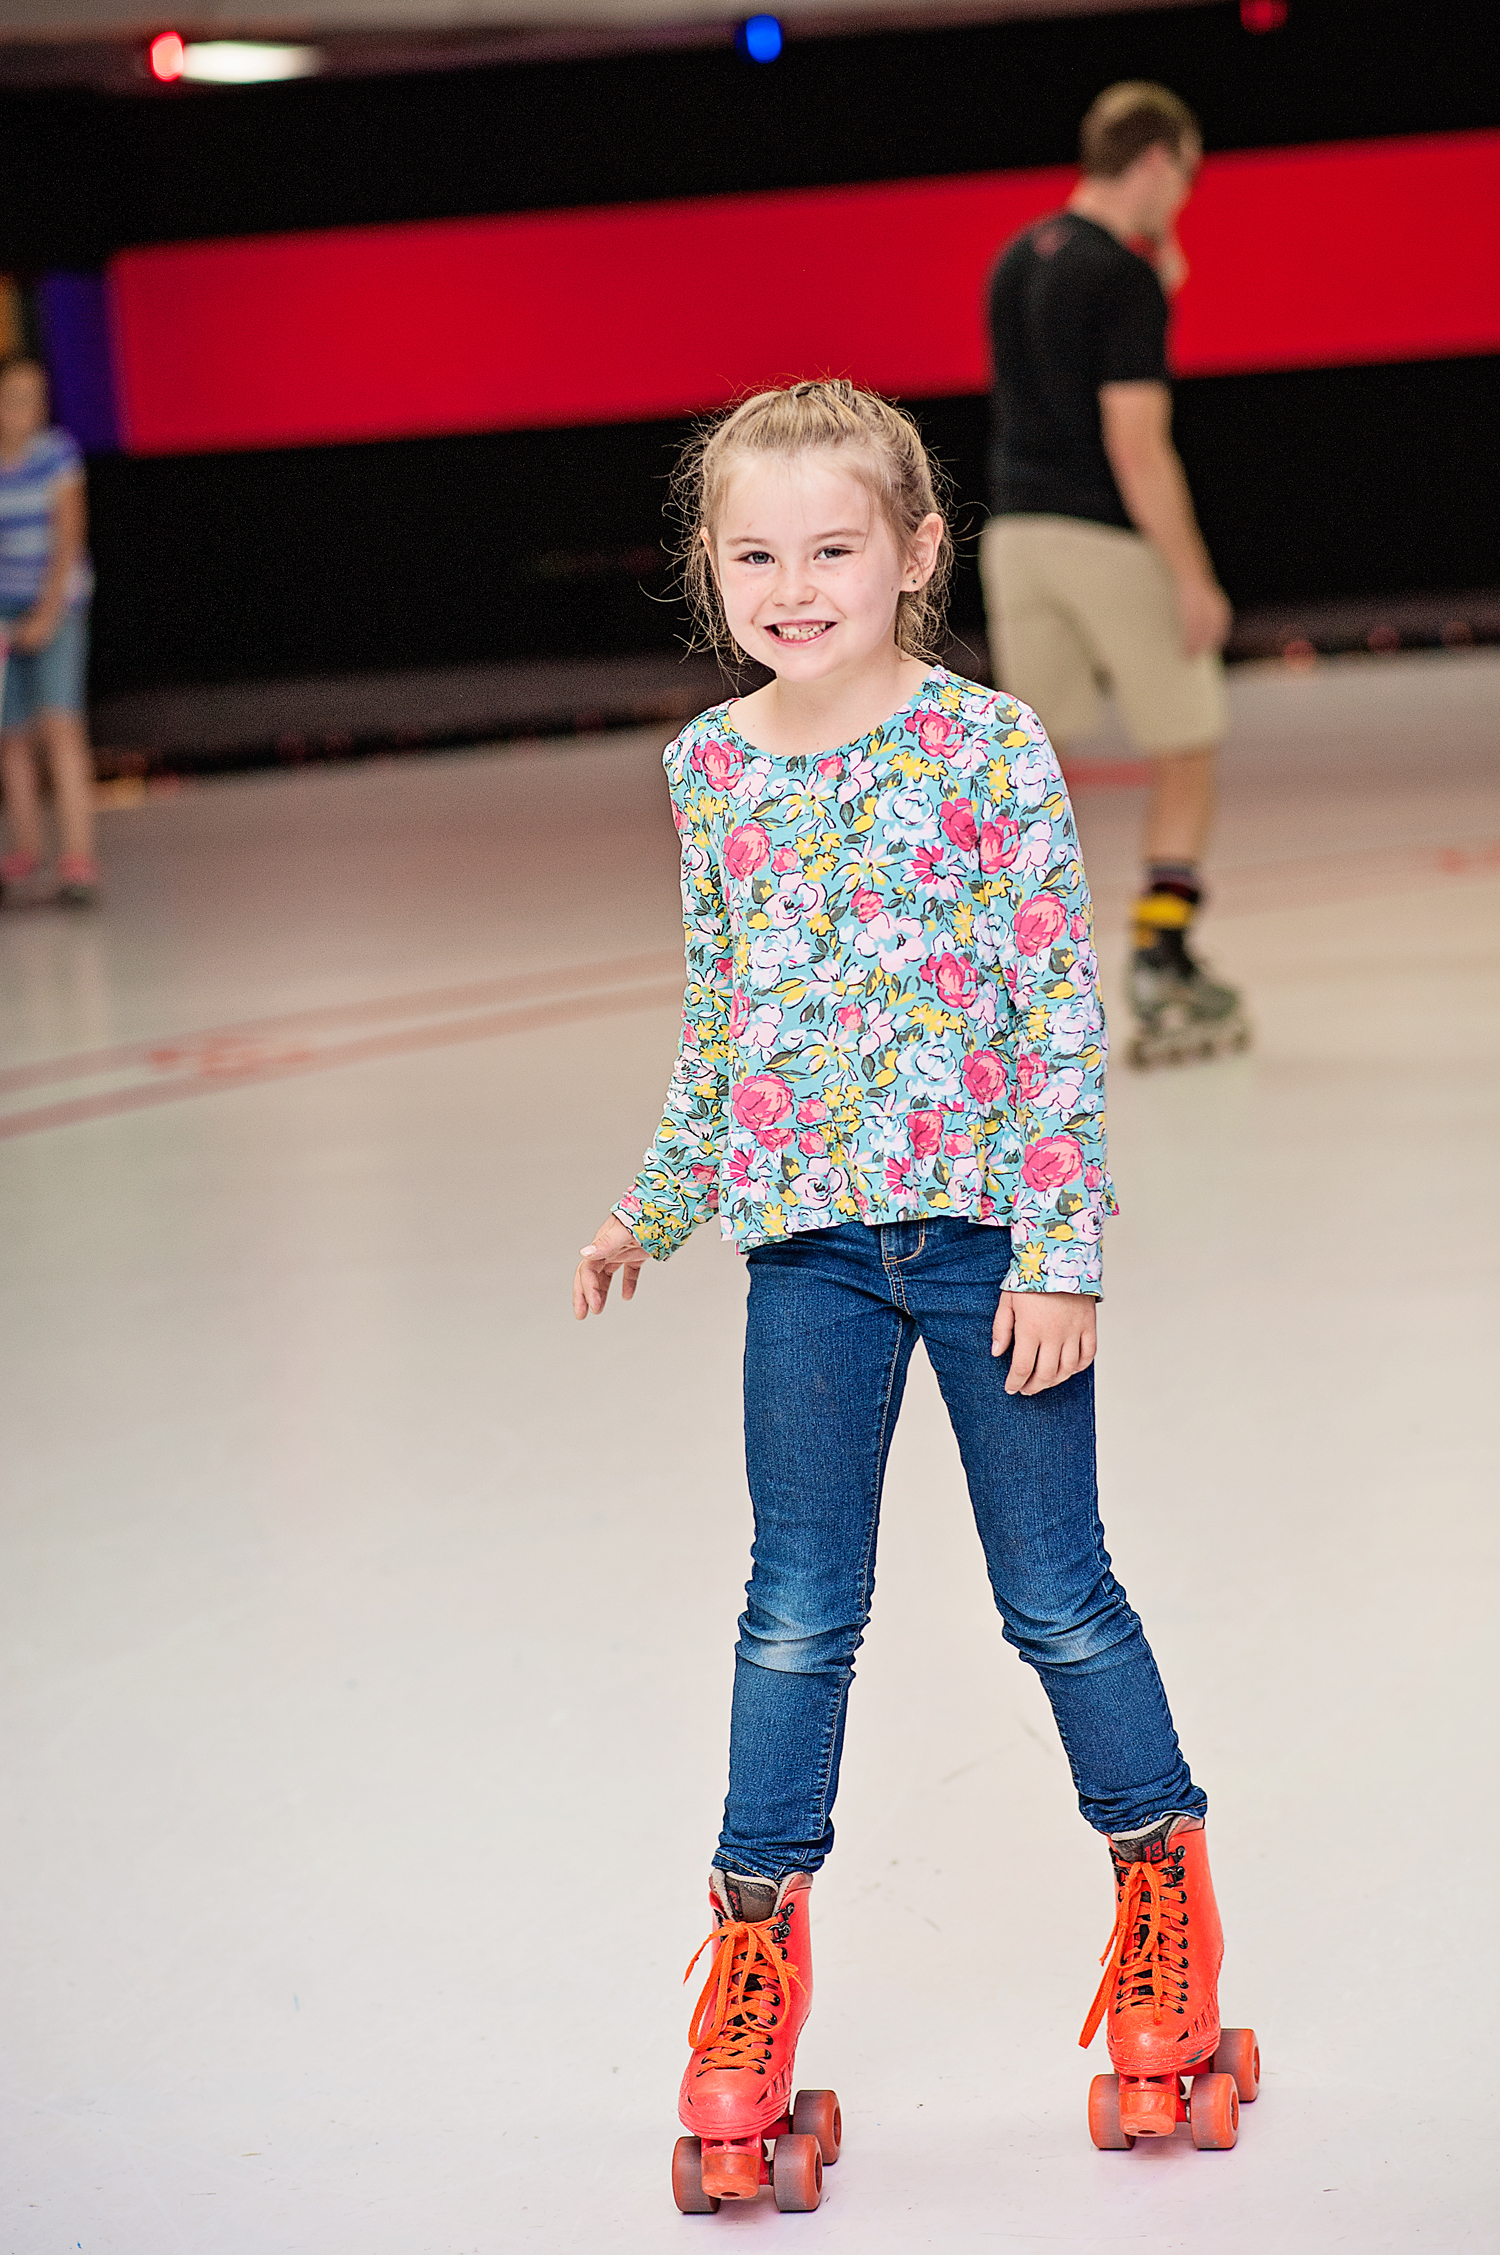  Girl skates on rink cote skating floor at classic fun center 